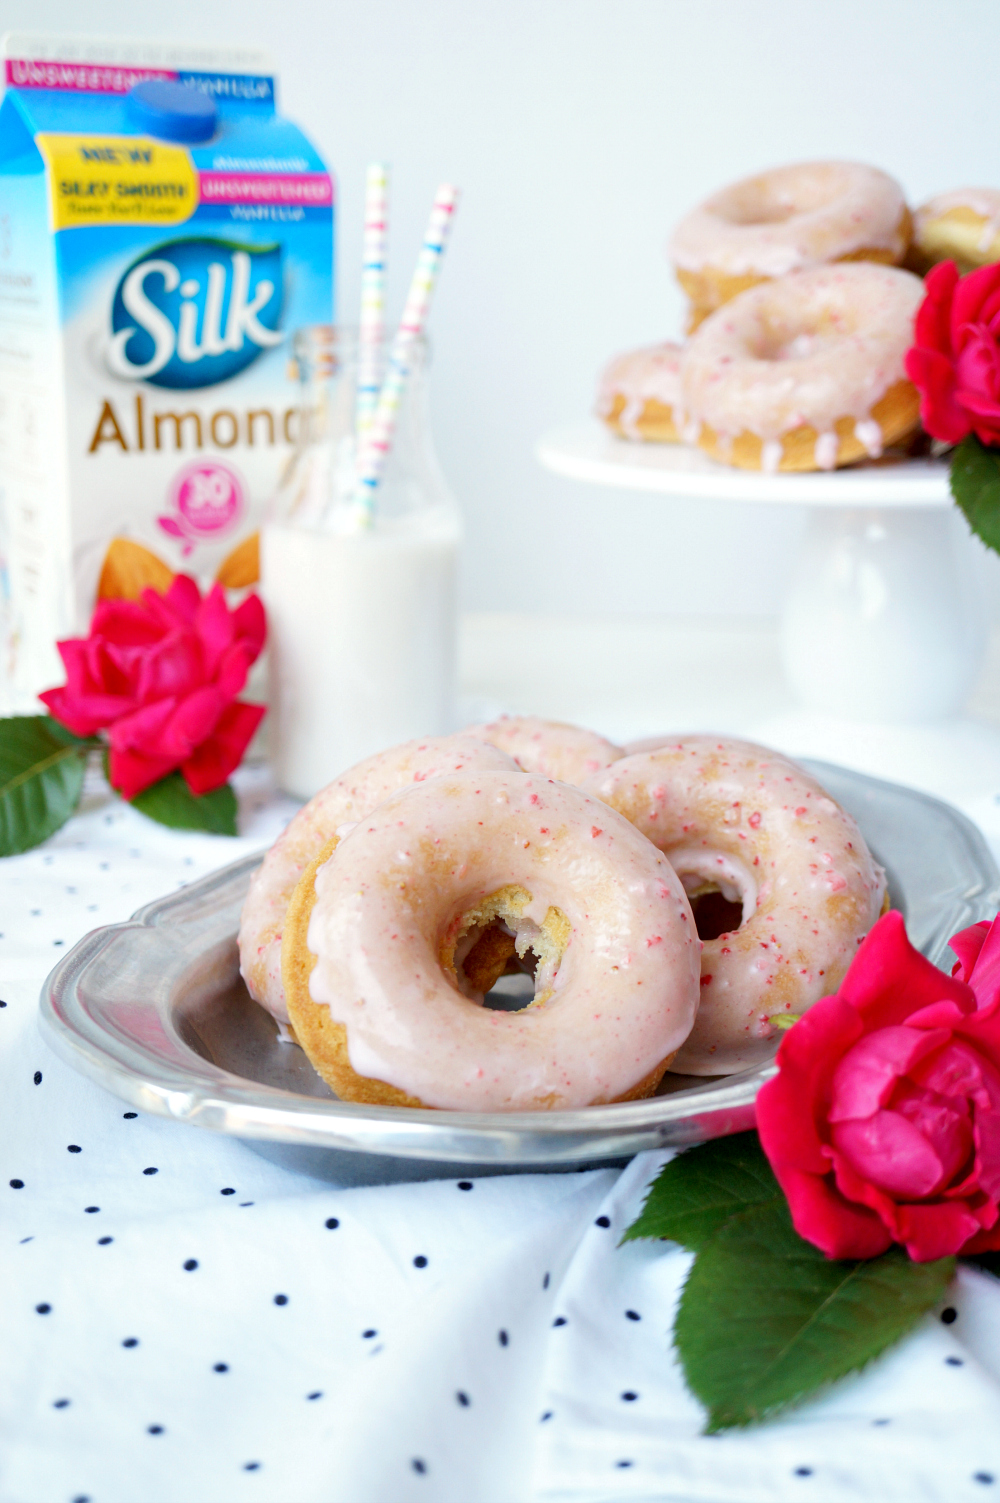 baked vanilla donuts with strawberry glaze {vegan/soy-free} | The Baking Fairy #ProgressIsPerfection #CBias #ad @Walmart @LoveMySilk